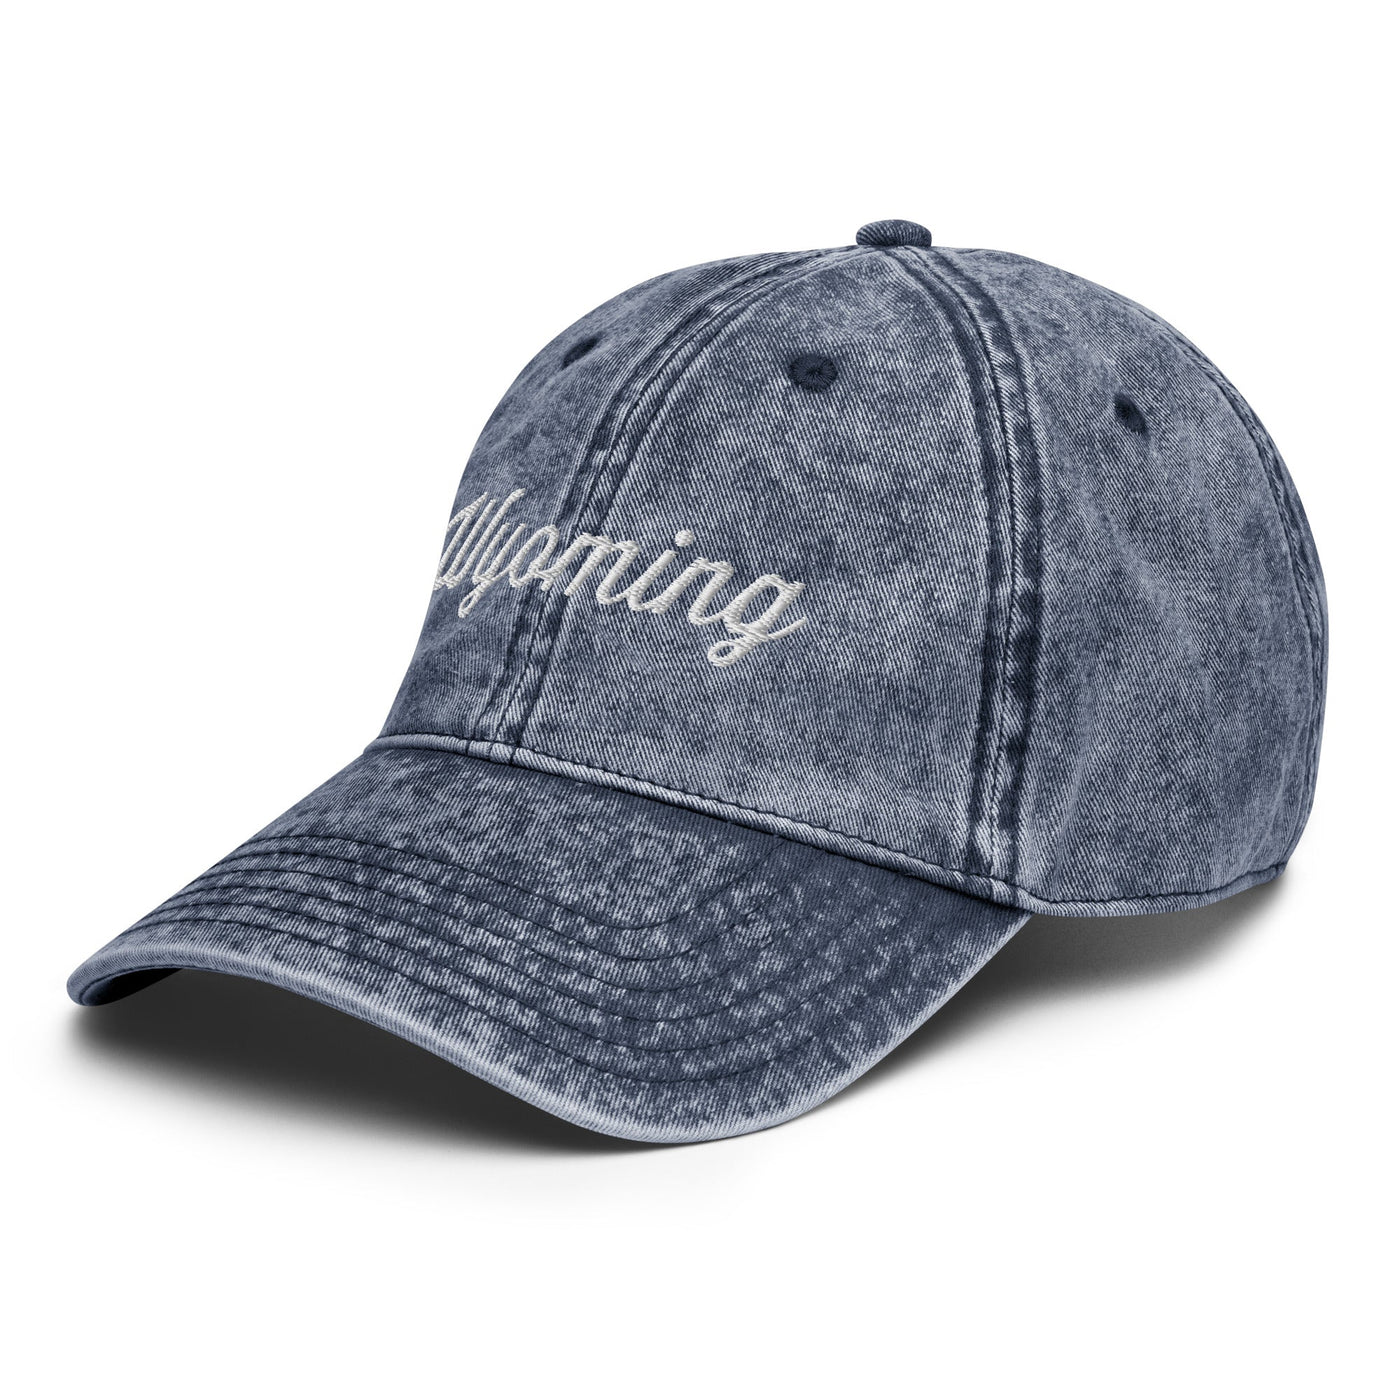 Wyoming Hat - Ezra's Clothing